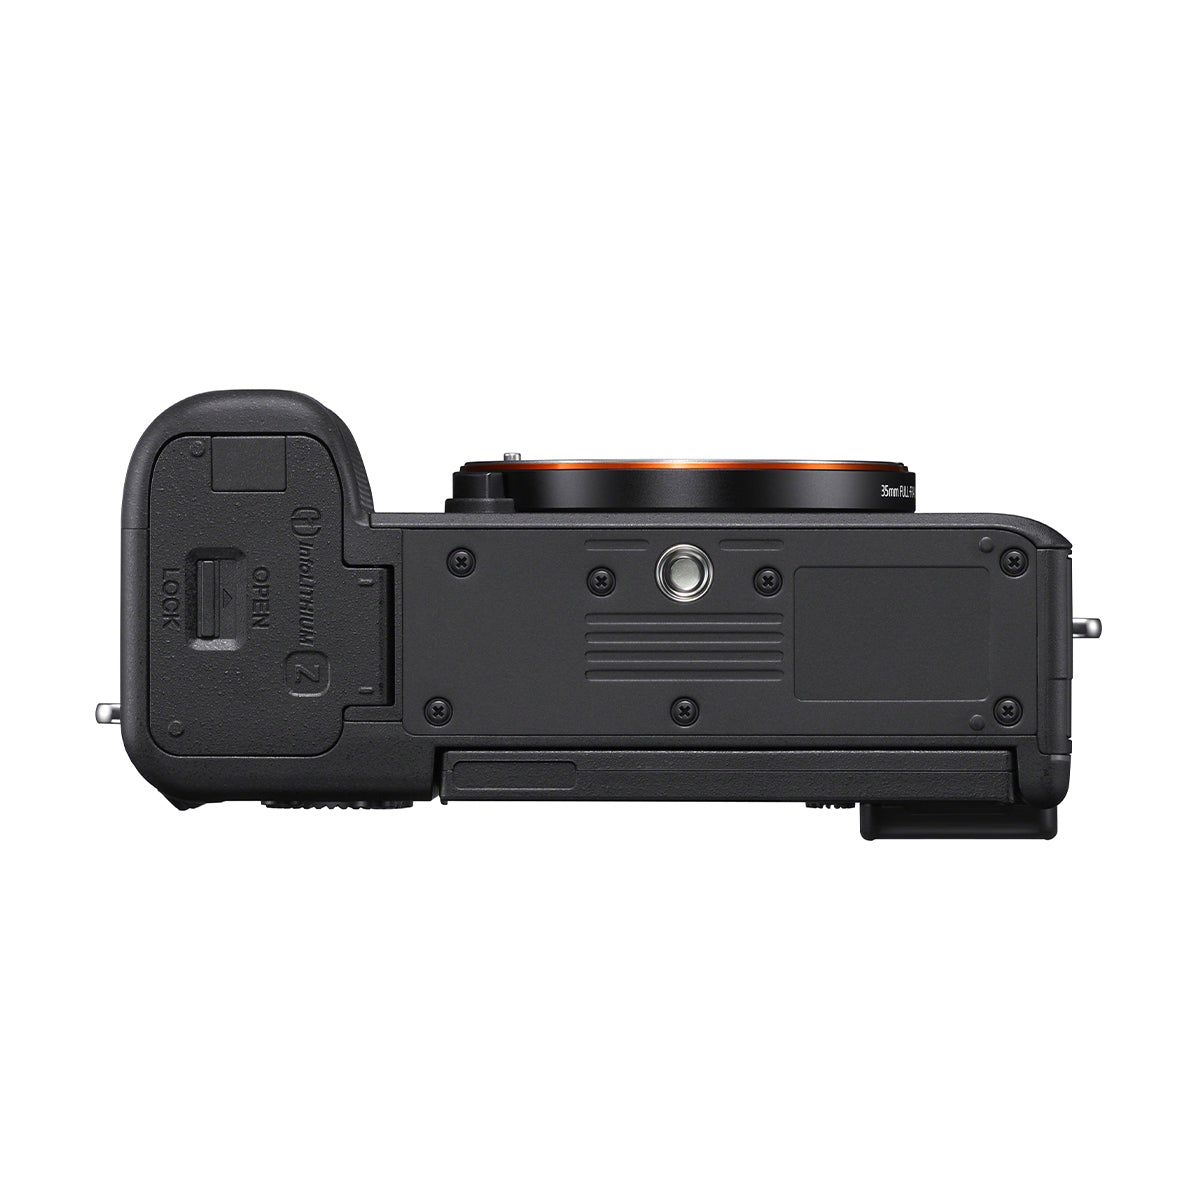 Sony Alpha a7C Full Frame Compact Mirrorless Camera Body (Black)